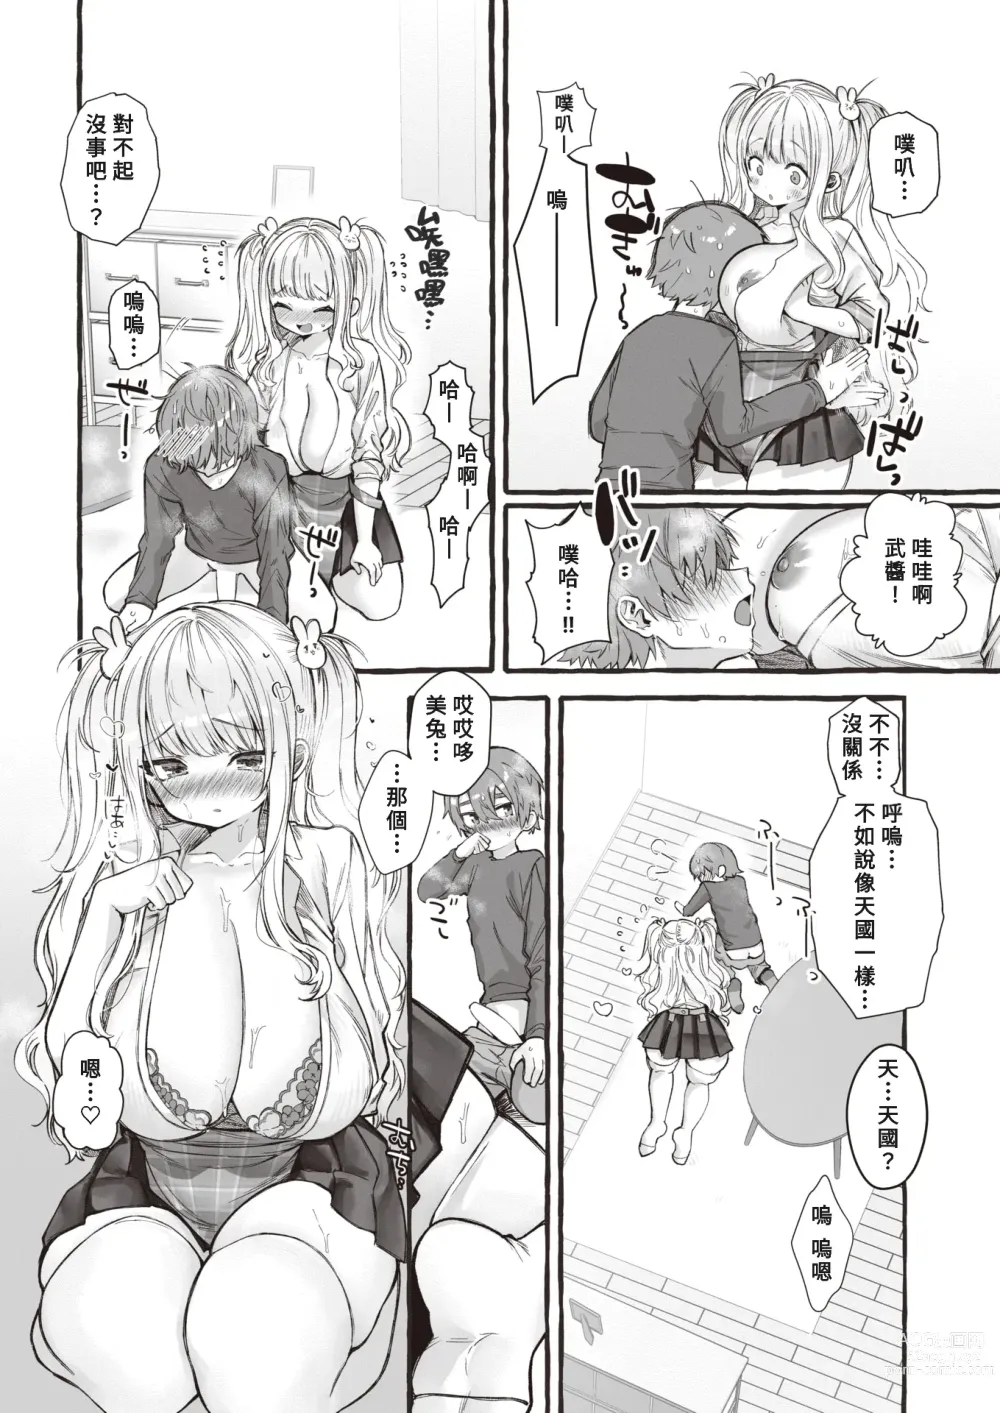 Page 13 of manga ZOO-Kei Joshi@Usagi